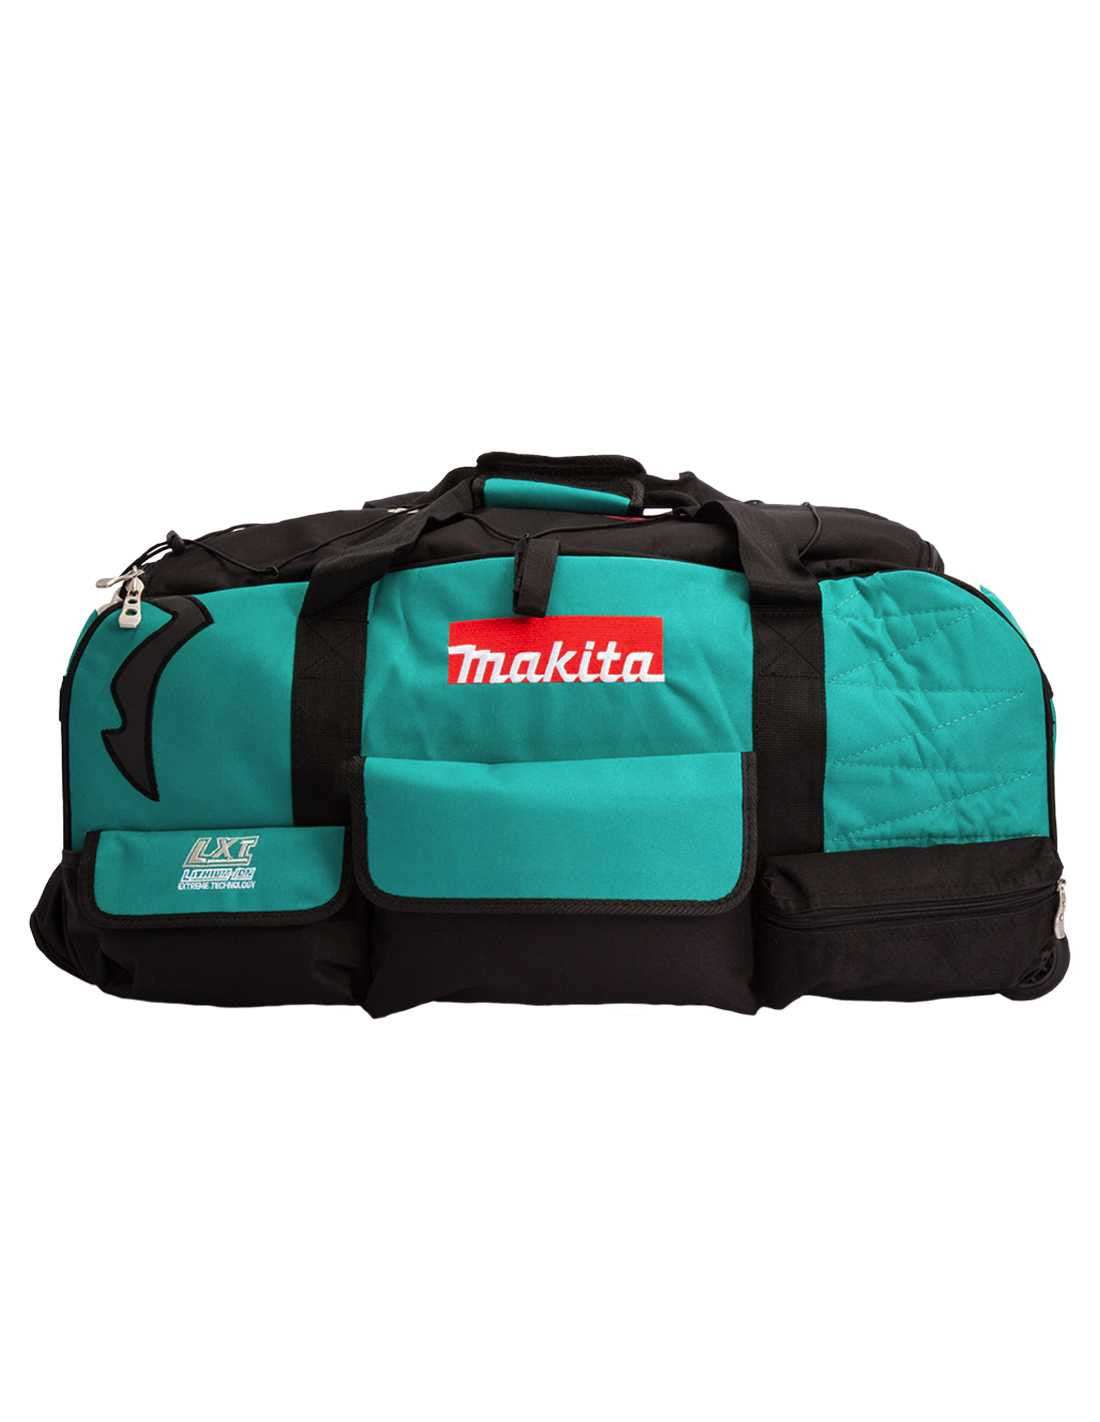 Kit Makita avec 8 outils + 3 bat 5.0Ah + chargeur + 2 sacs DLX8171BL3